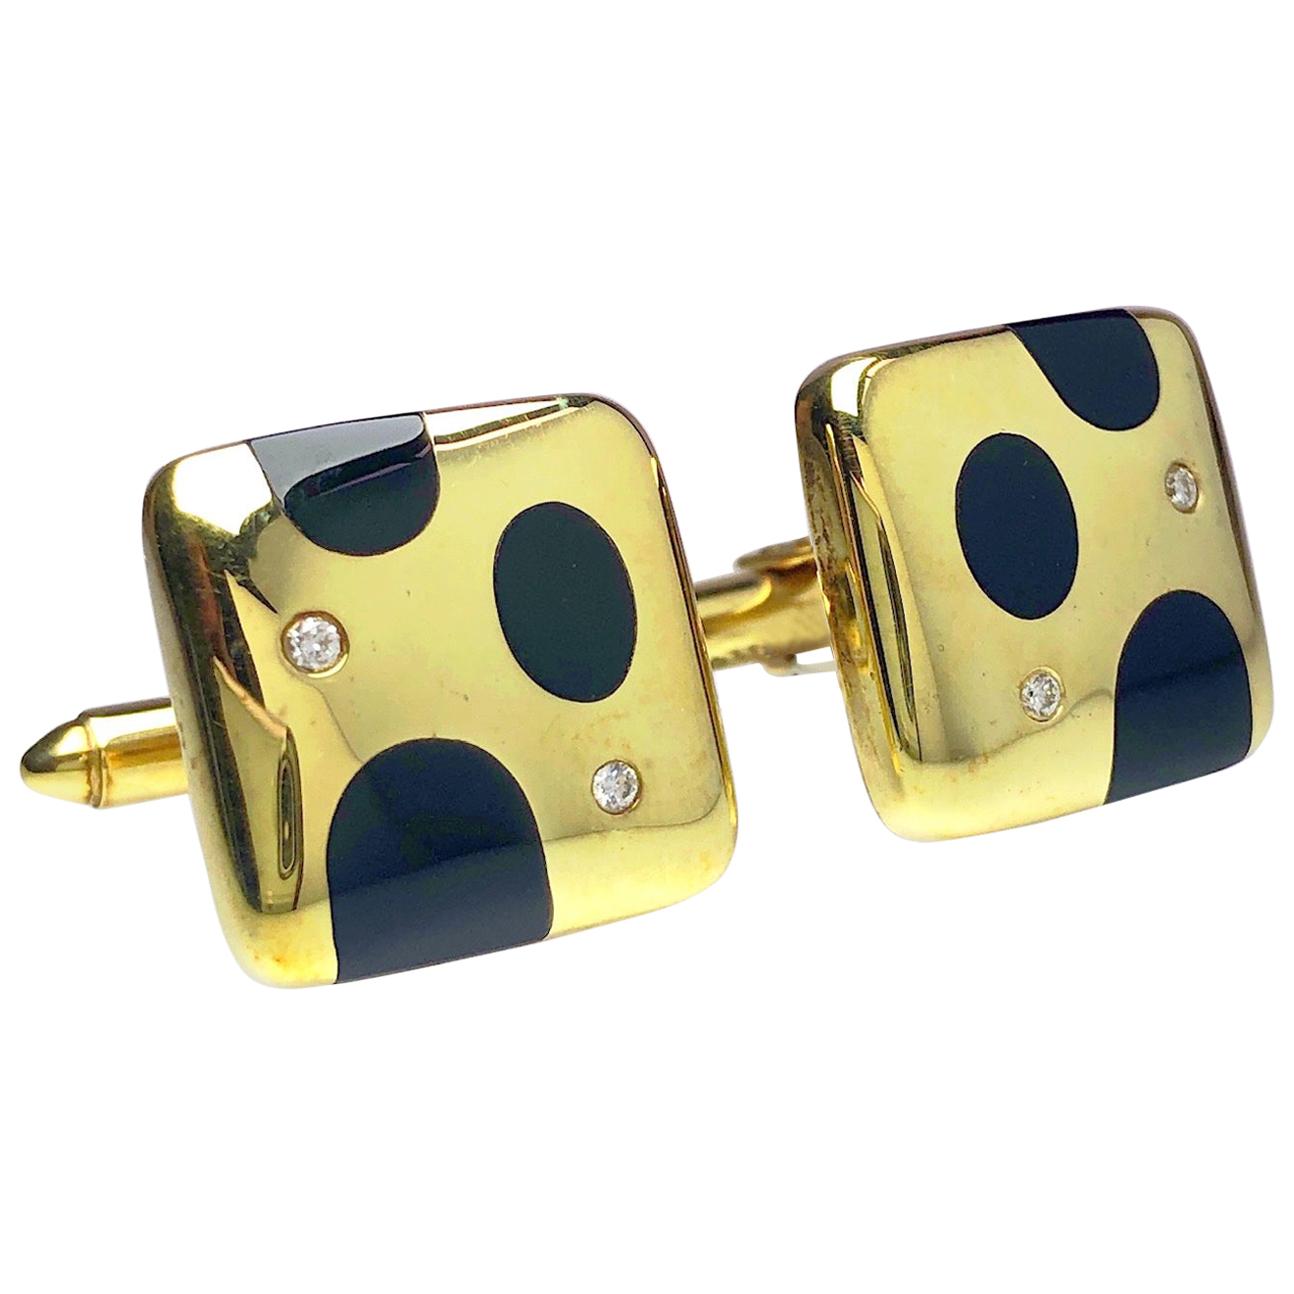 Asch Grossbardt 18 Karat Gold Cushion Cufflinks with Inlaid Onyx and Diamonds